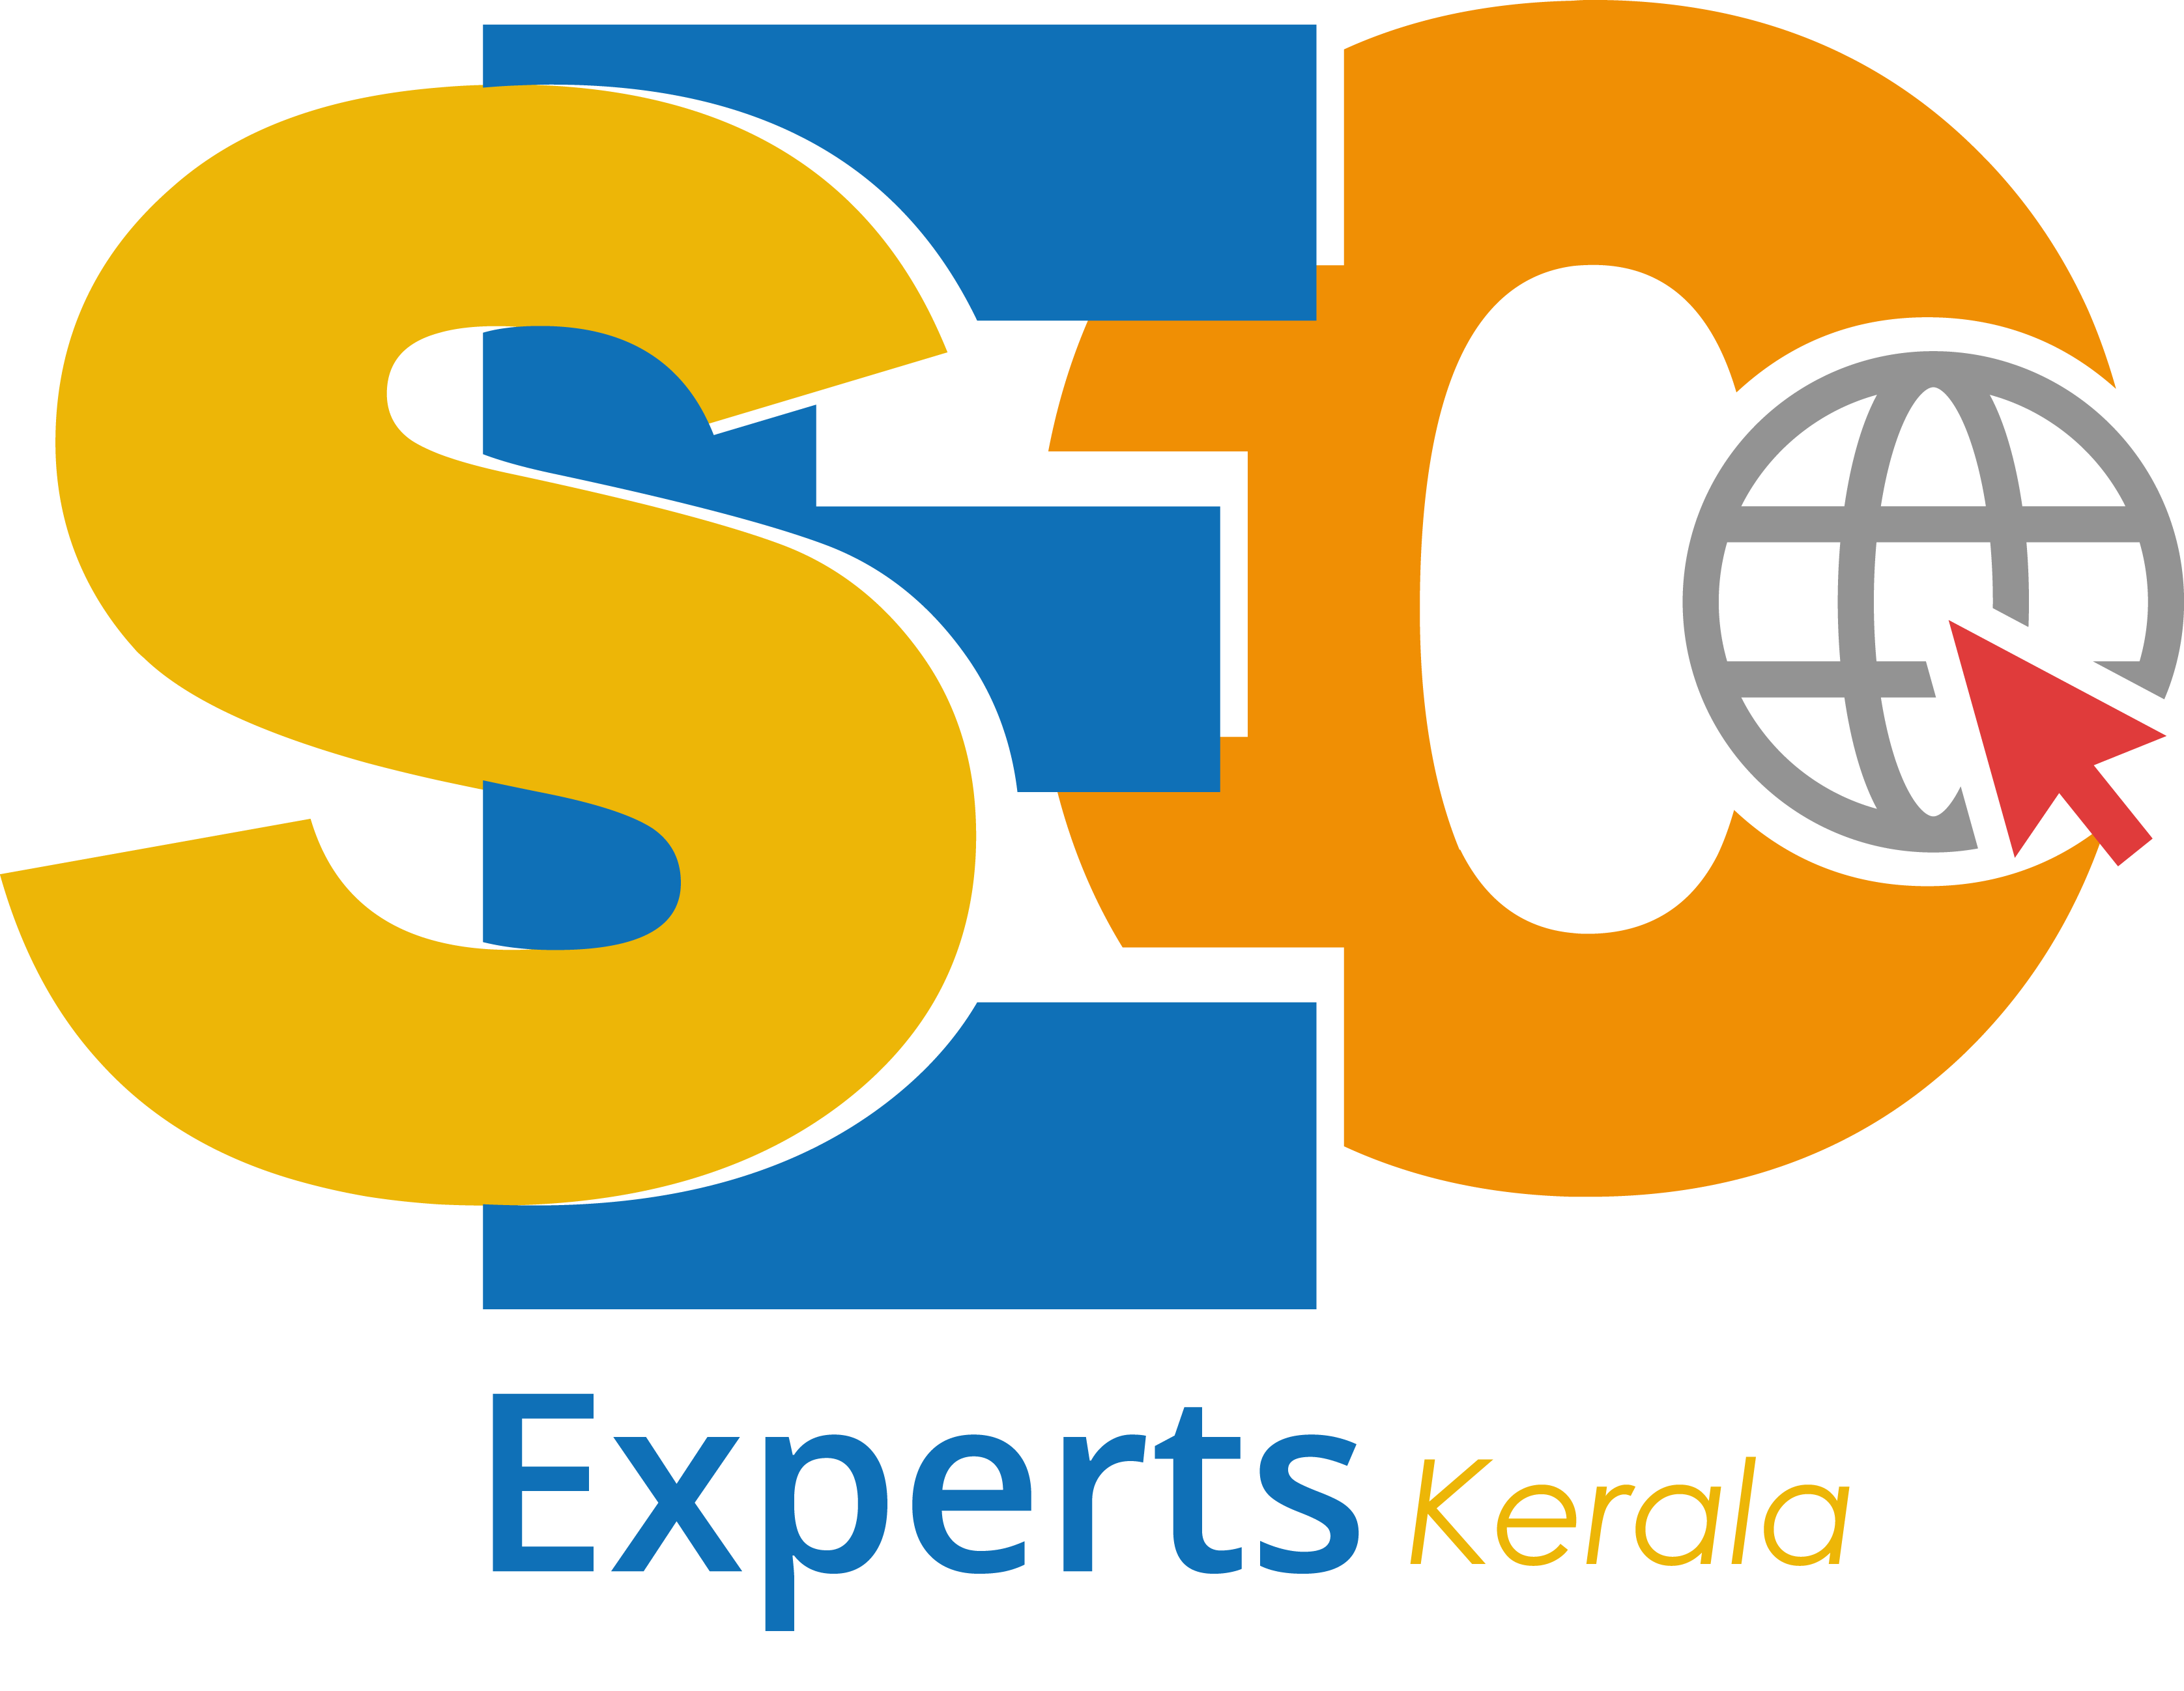 SEO Services Kerala